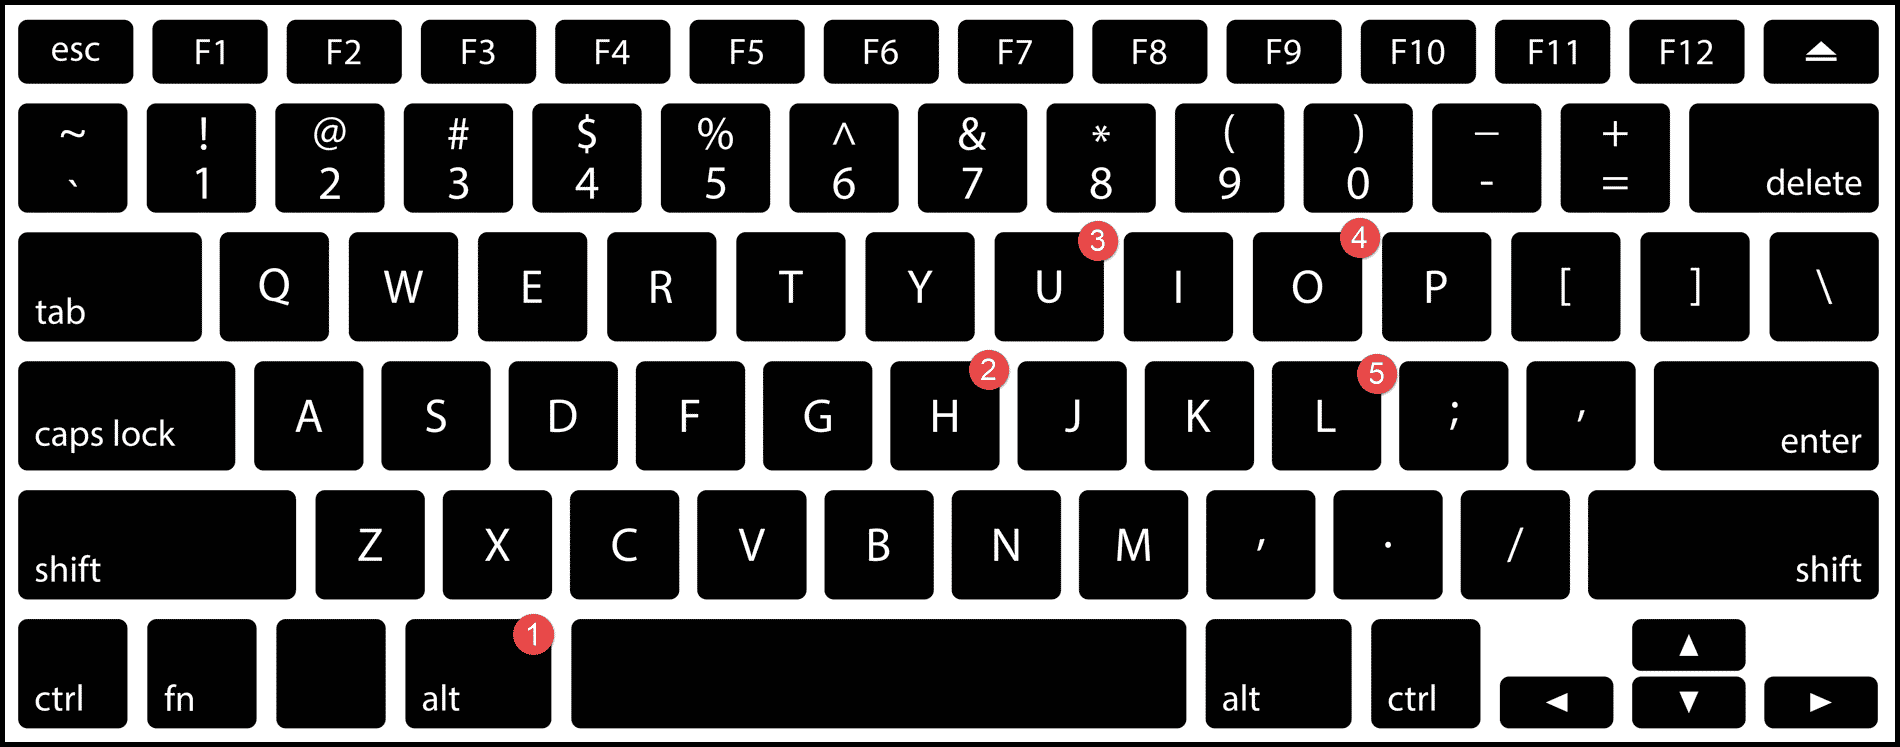 método abreviado de teclado para mostrar columnas